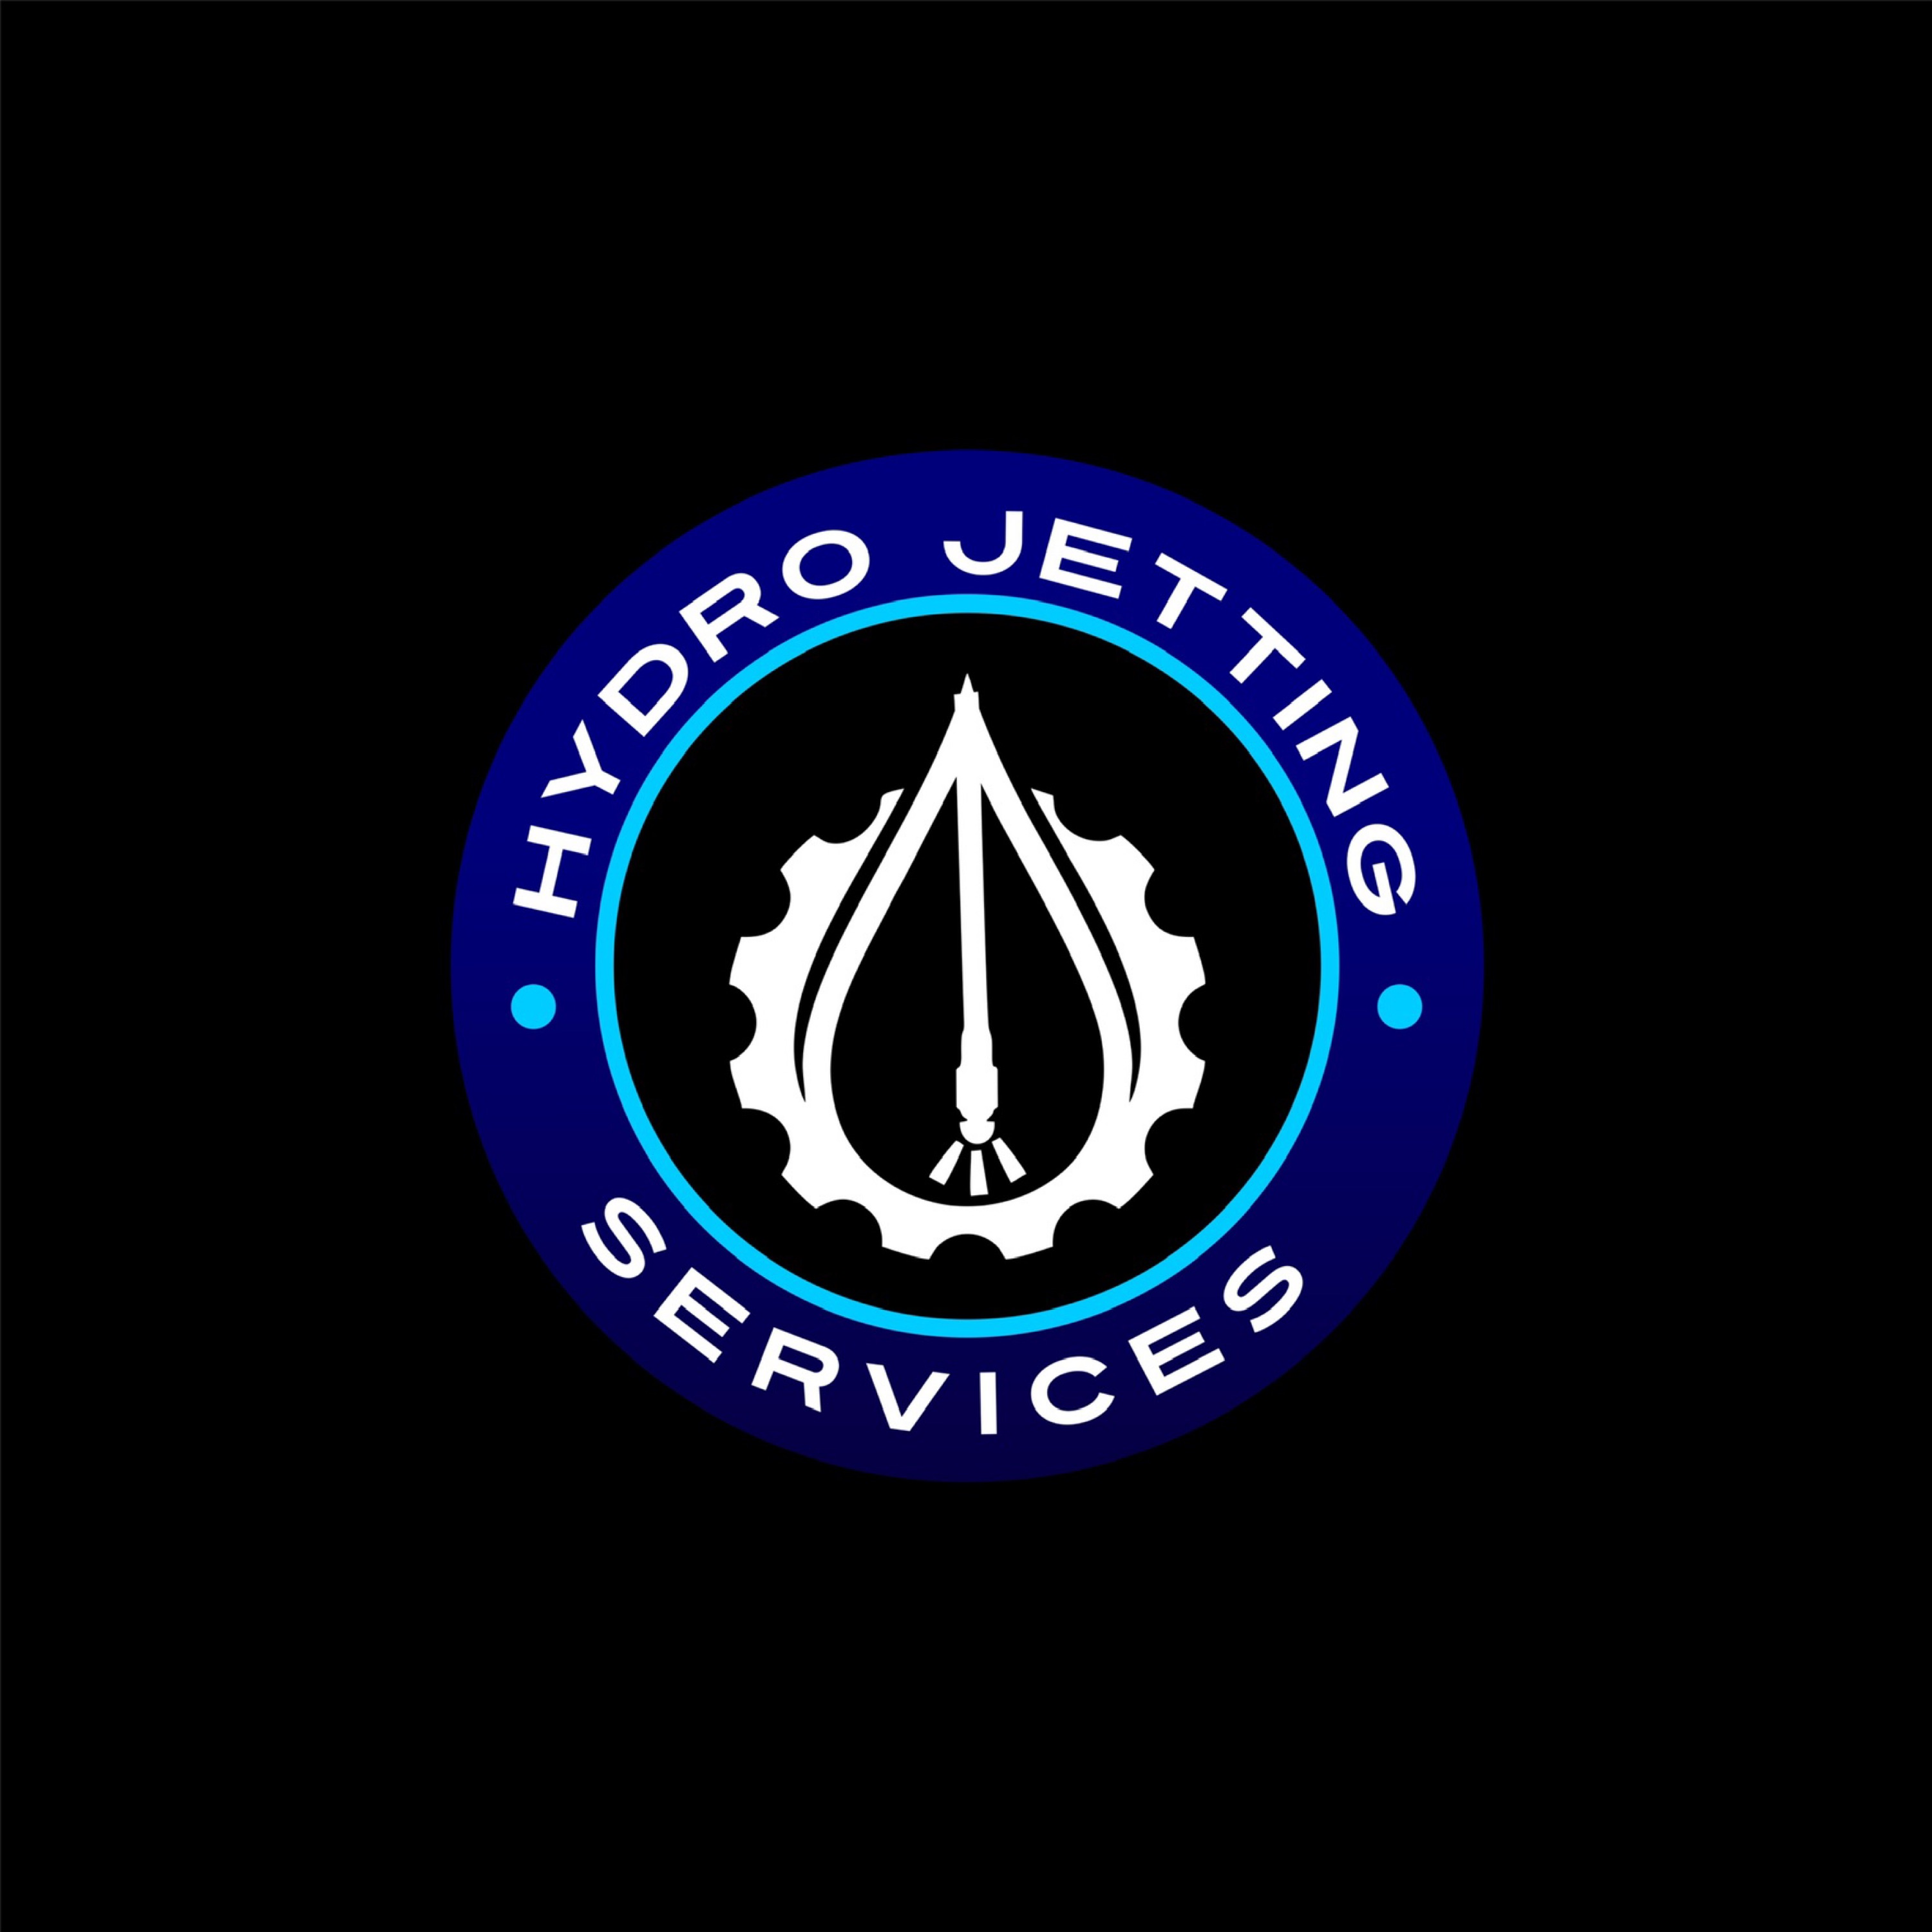 Perdomo Rogel Hydro Jetting Services Logo